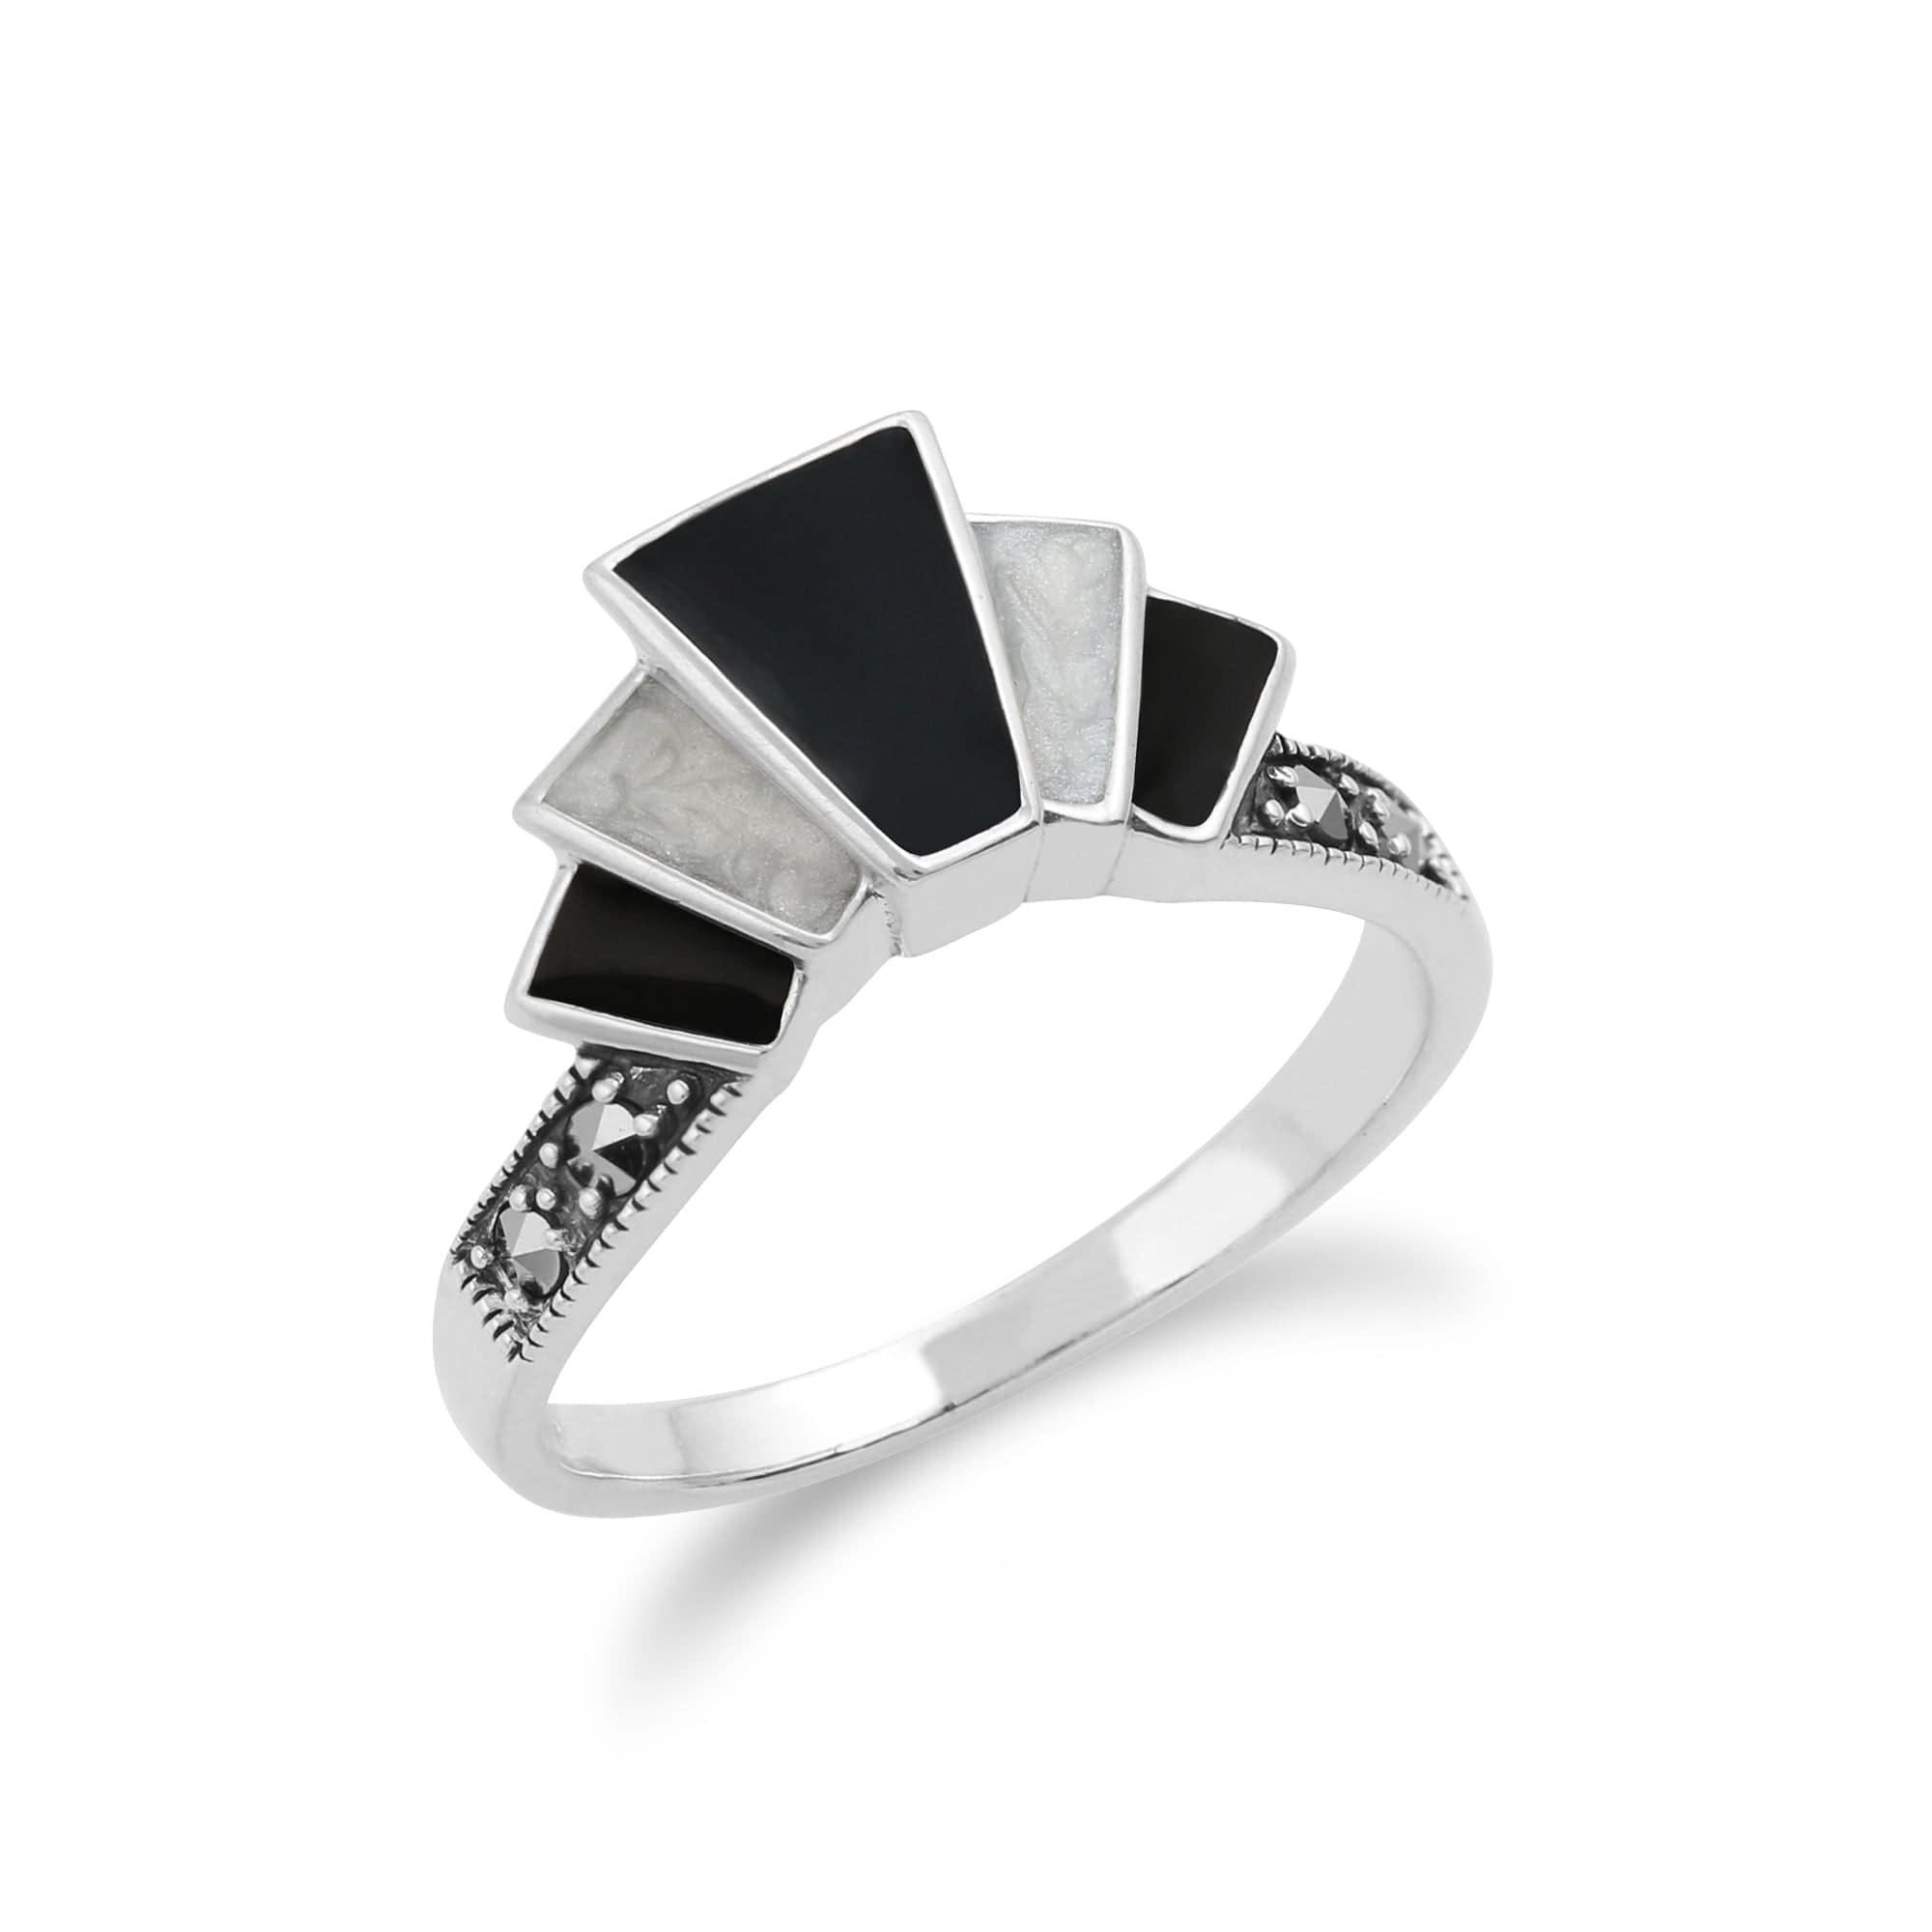 Art Deco Style Marcasite & Black and White Enamel Gradient Fan Ring in 925 Sterling Silver - Gemondo